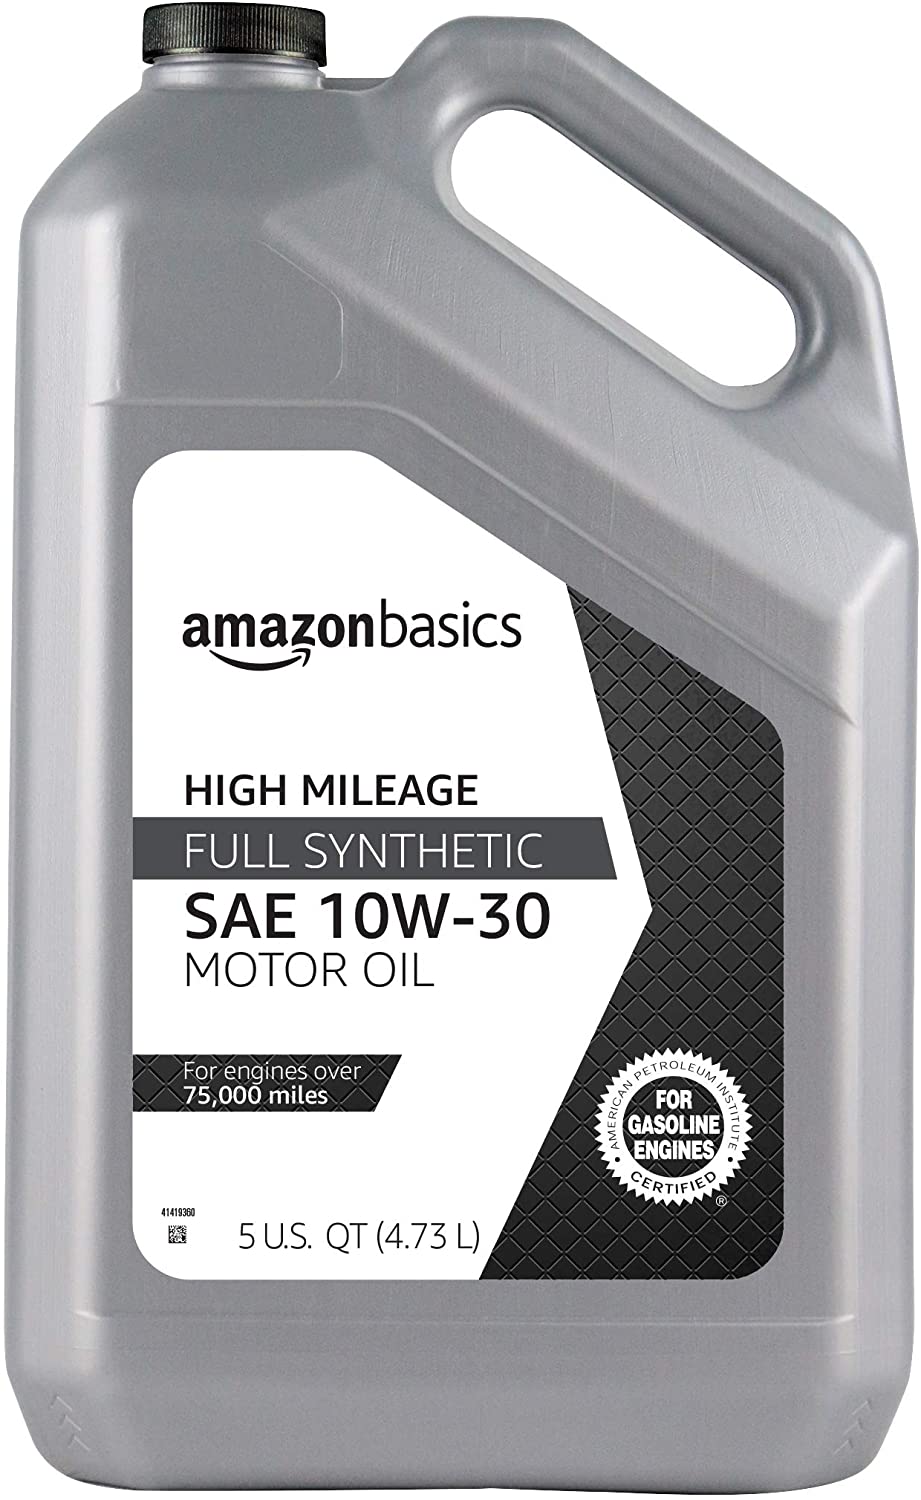 AmazonBasics Full Synthetic Motor Oil, SN Plus, 10W-30